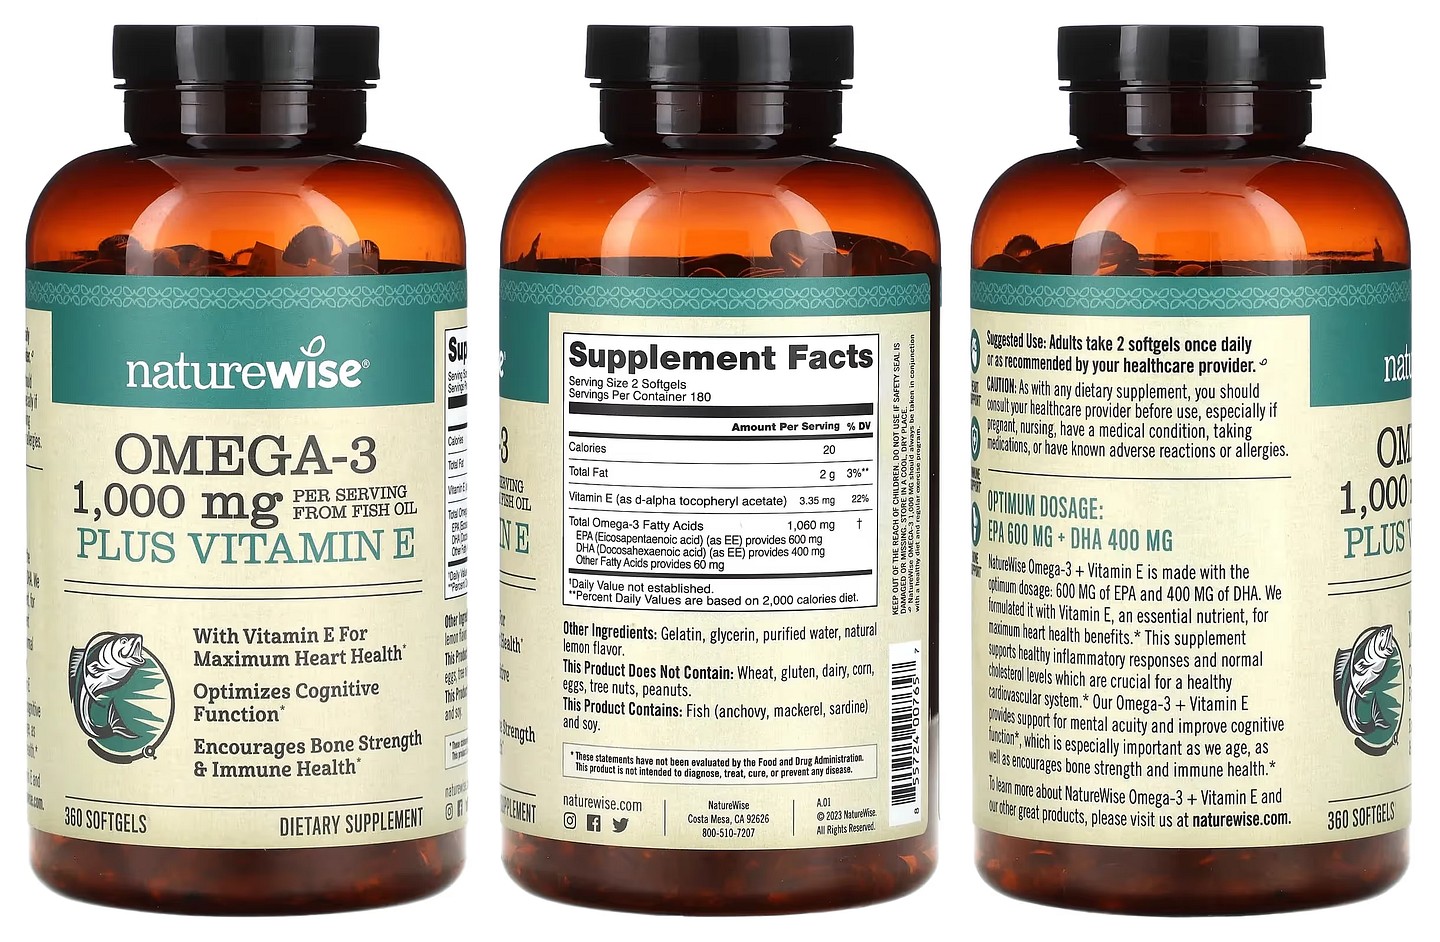 NatureWise, Omega-3 Plus Vitamin E packaging